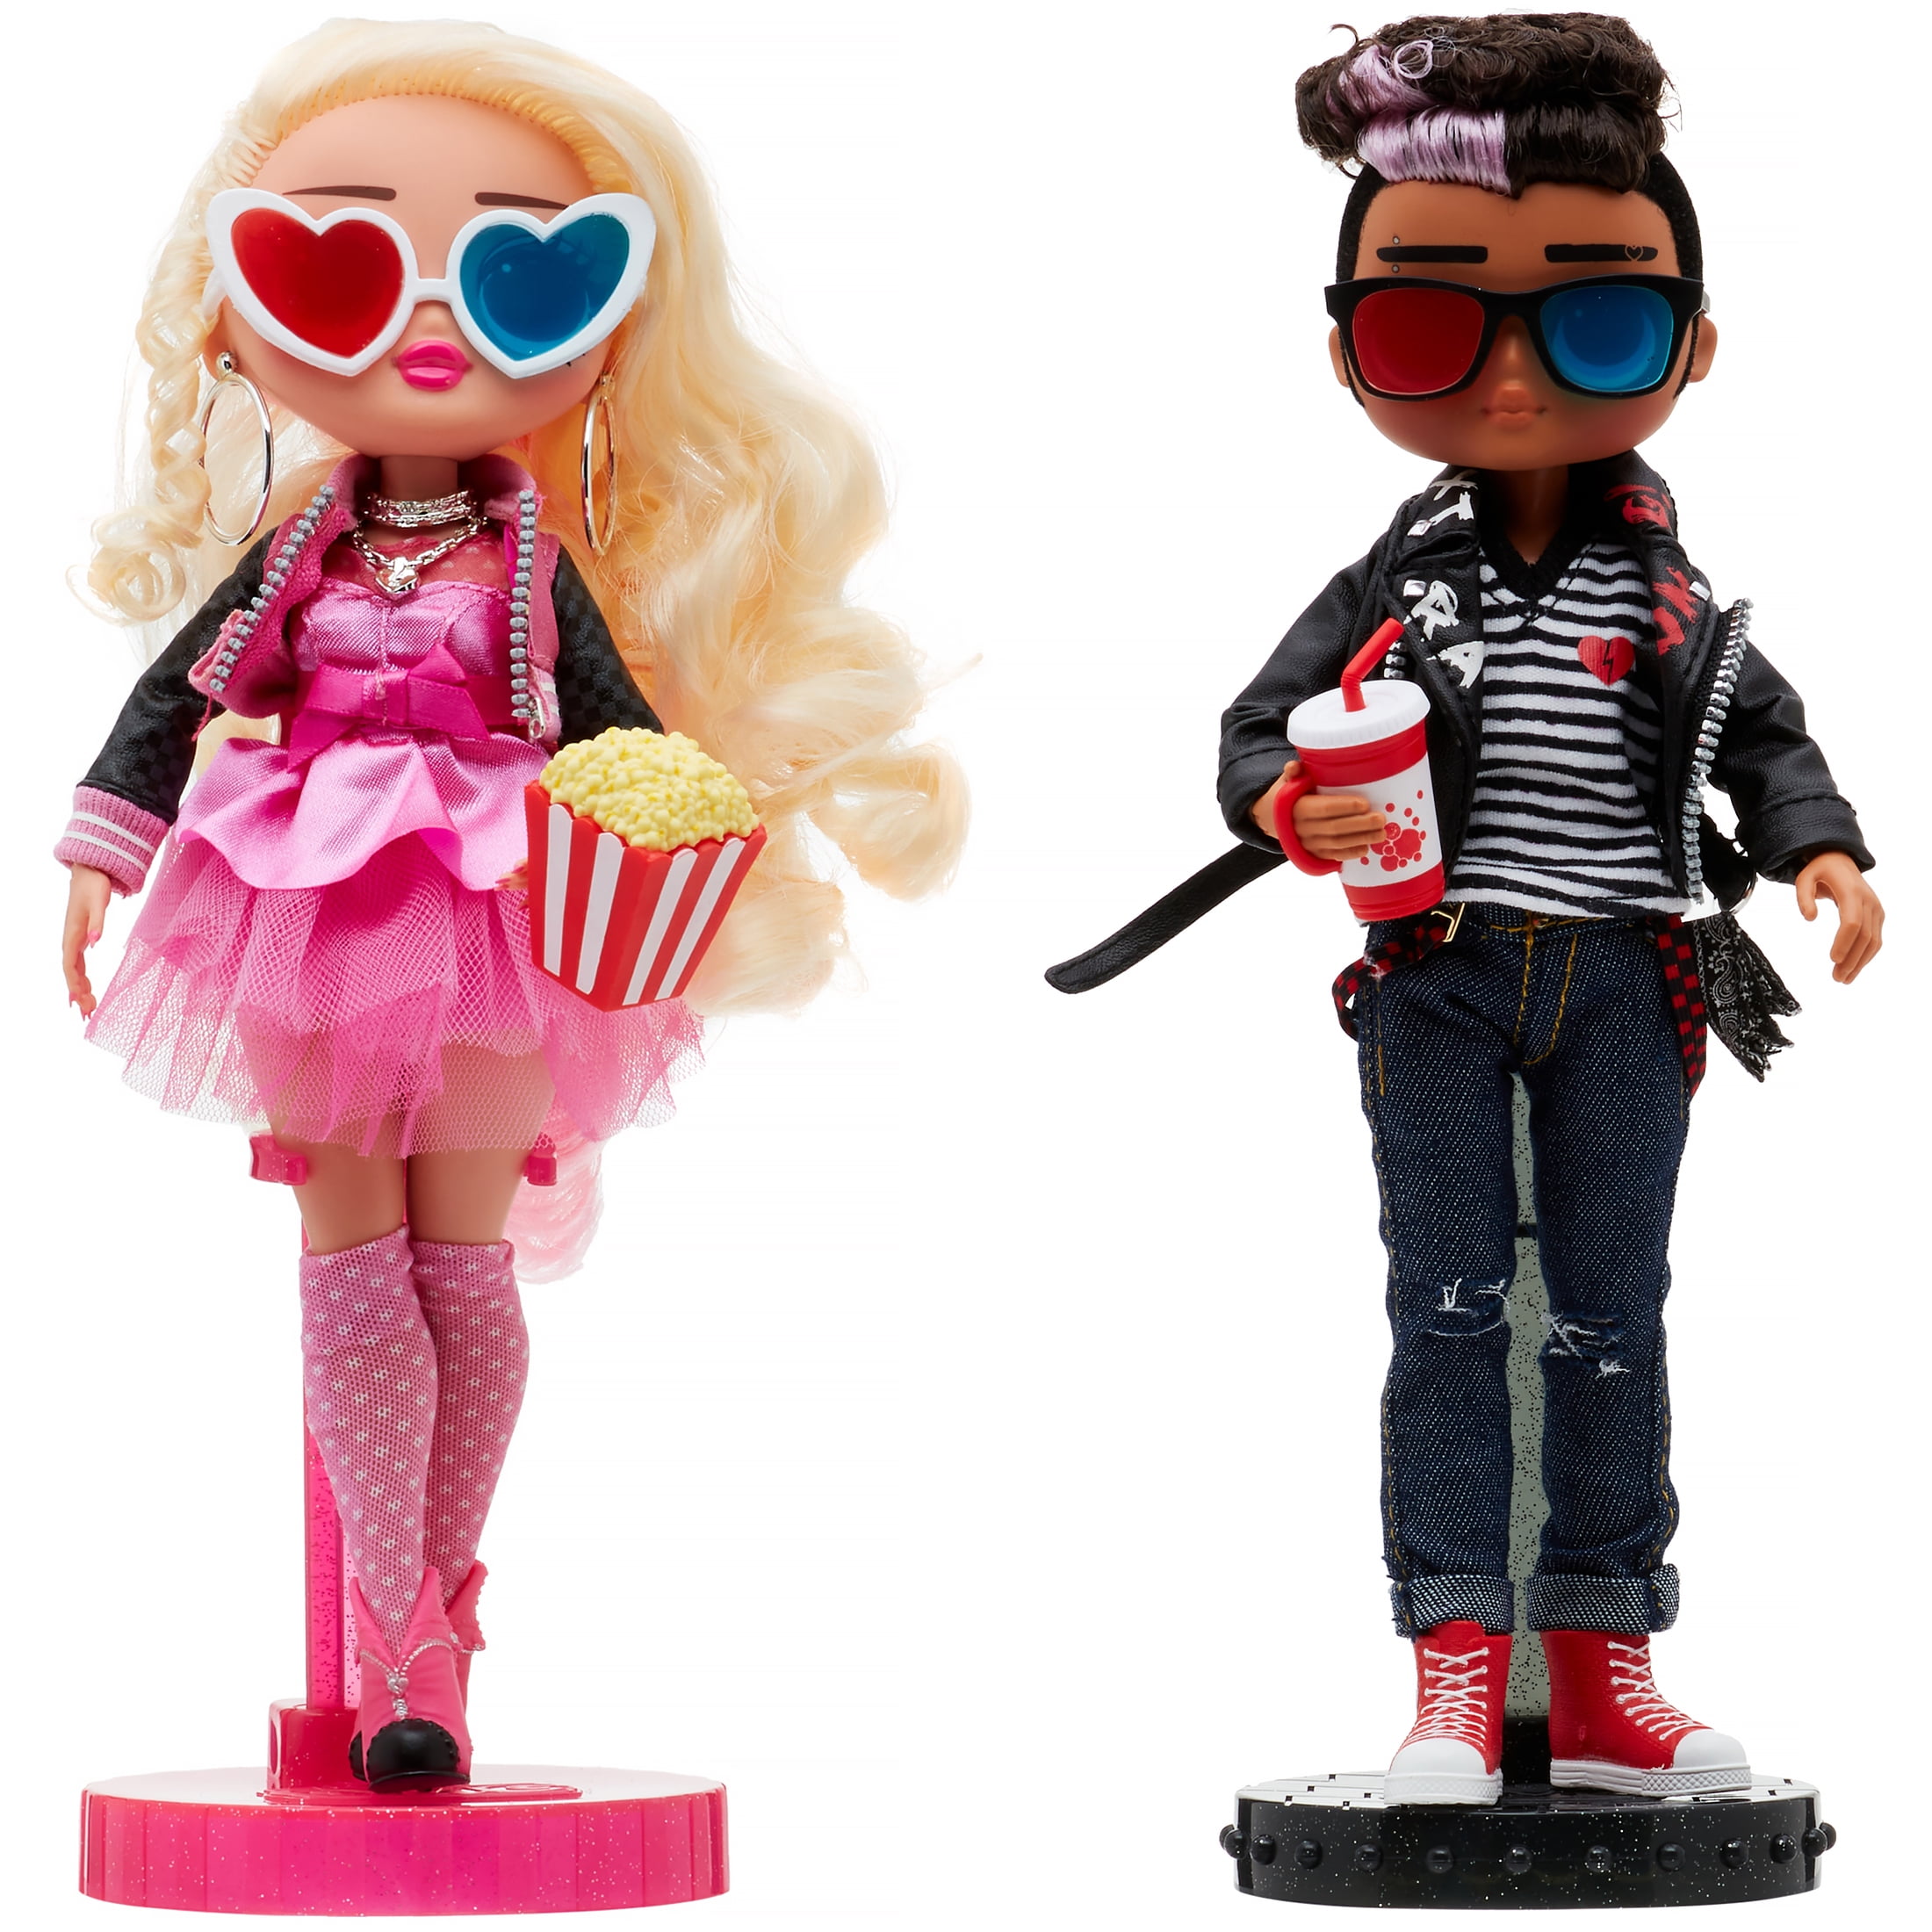 Lol Surprise OMG Movie Magic 2 Pack Fashion Dolls - Tough Dude & Pink Chick